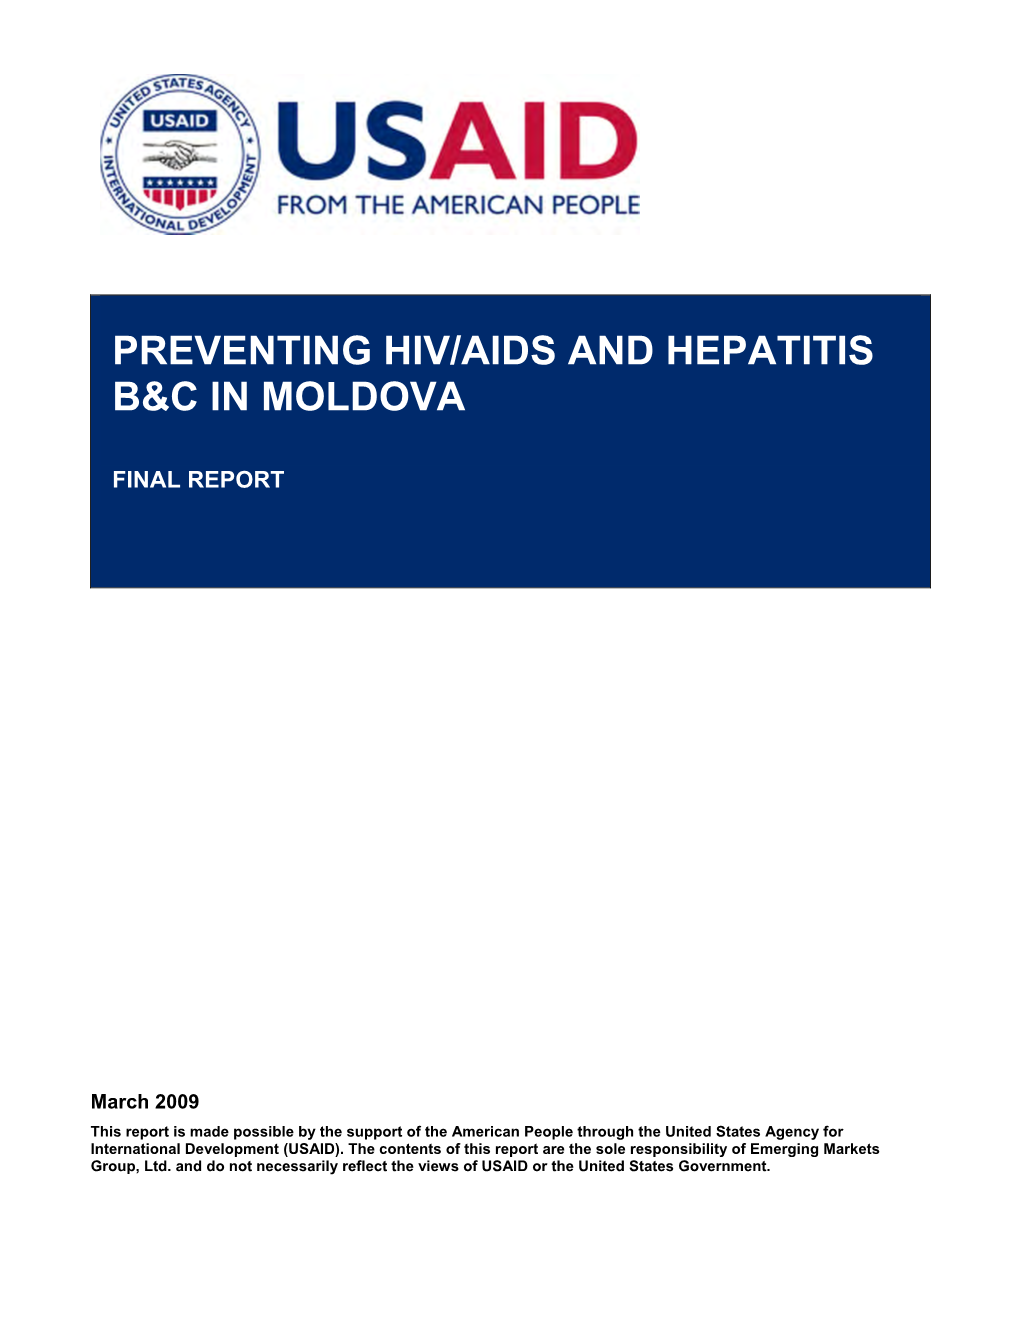 Preventing Hiv/Aids and Hepatitis B&C in Moldova